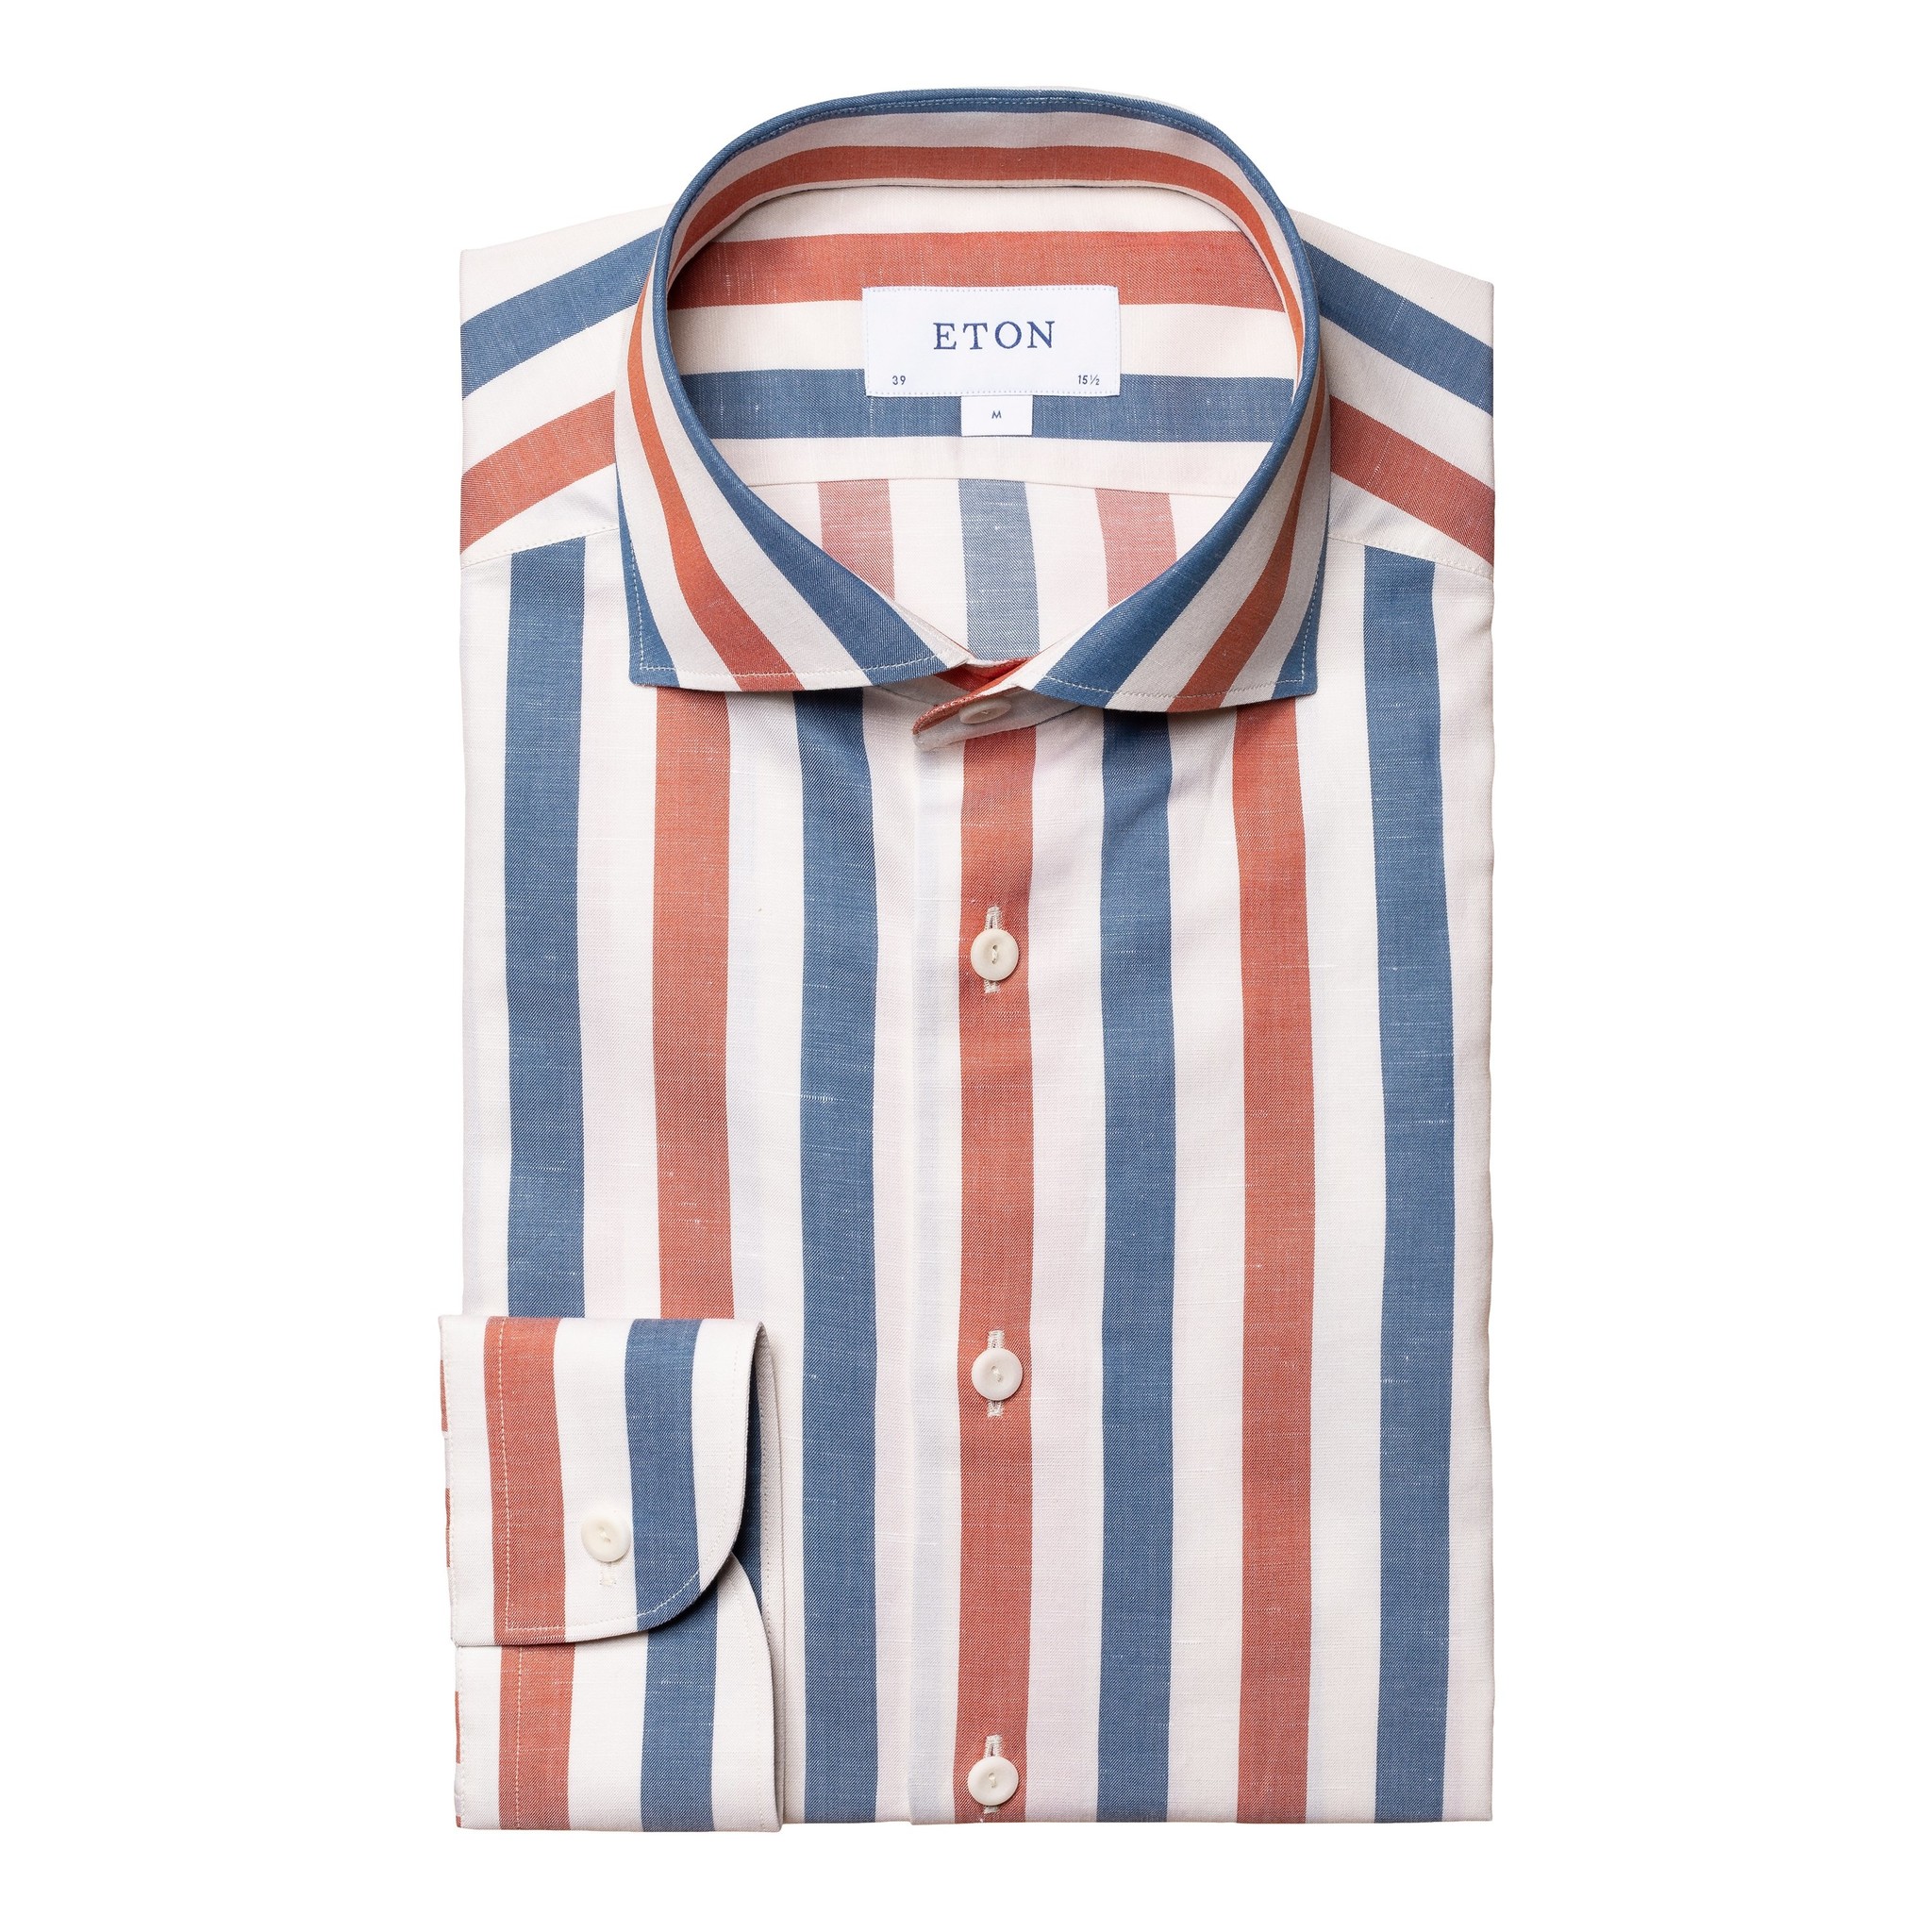 Eton Cotton linen wrinkle free blue/red stripe